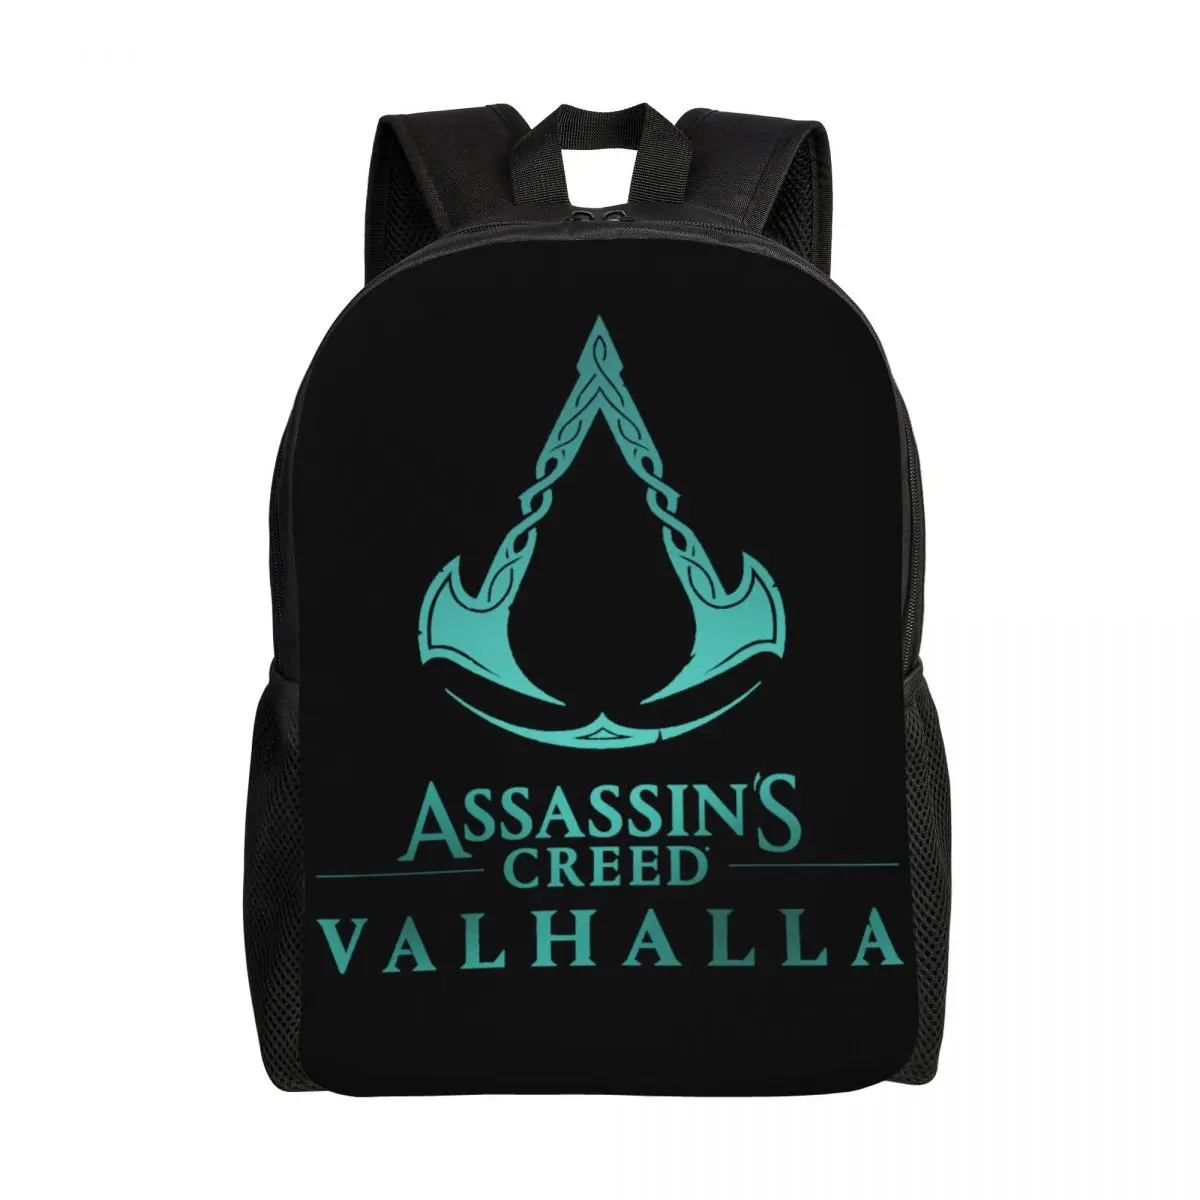 

Vikings Game Assassins Creed Valhalla Travel Backpack Men Women School Computer Bookbag College Student Daypack Bags